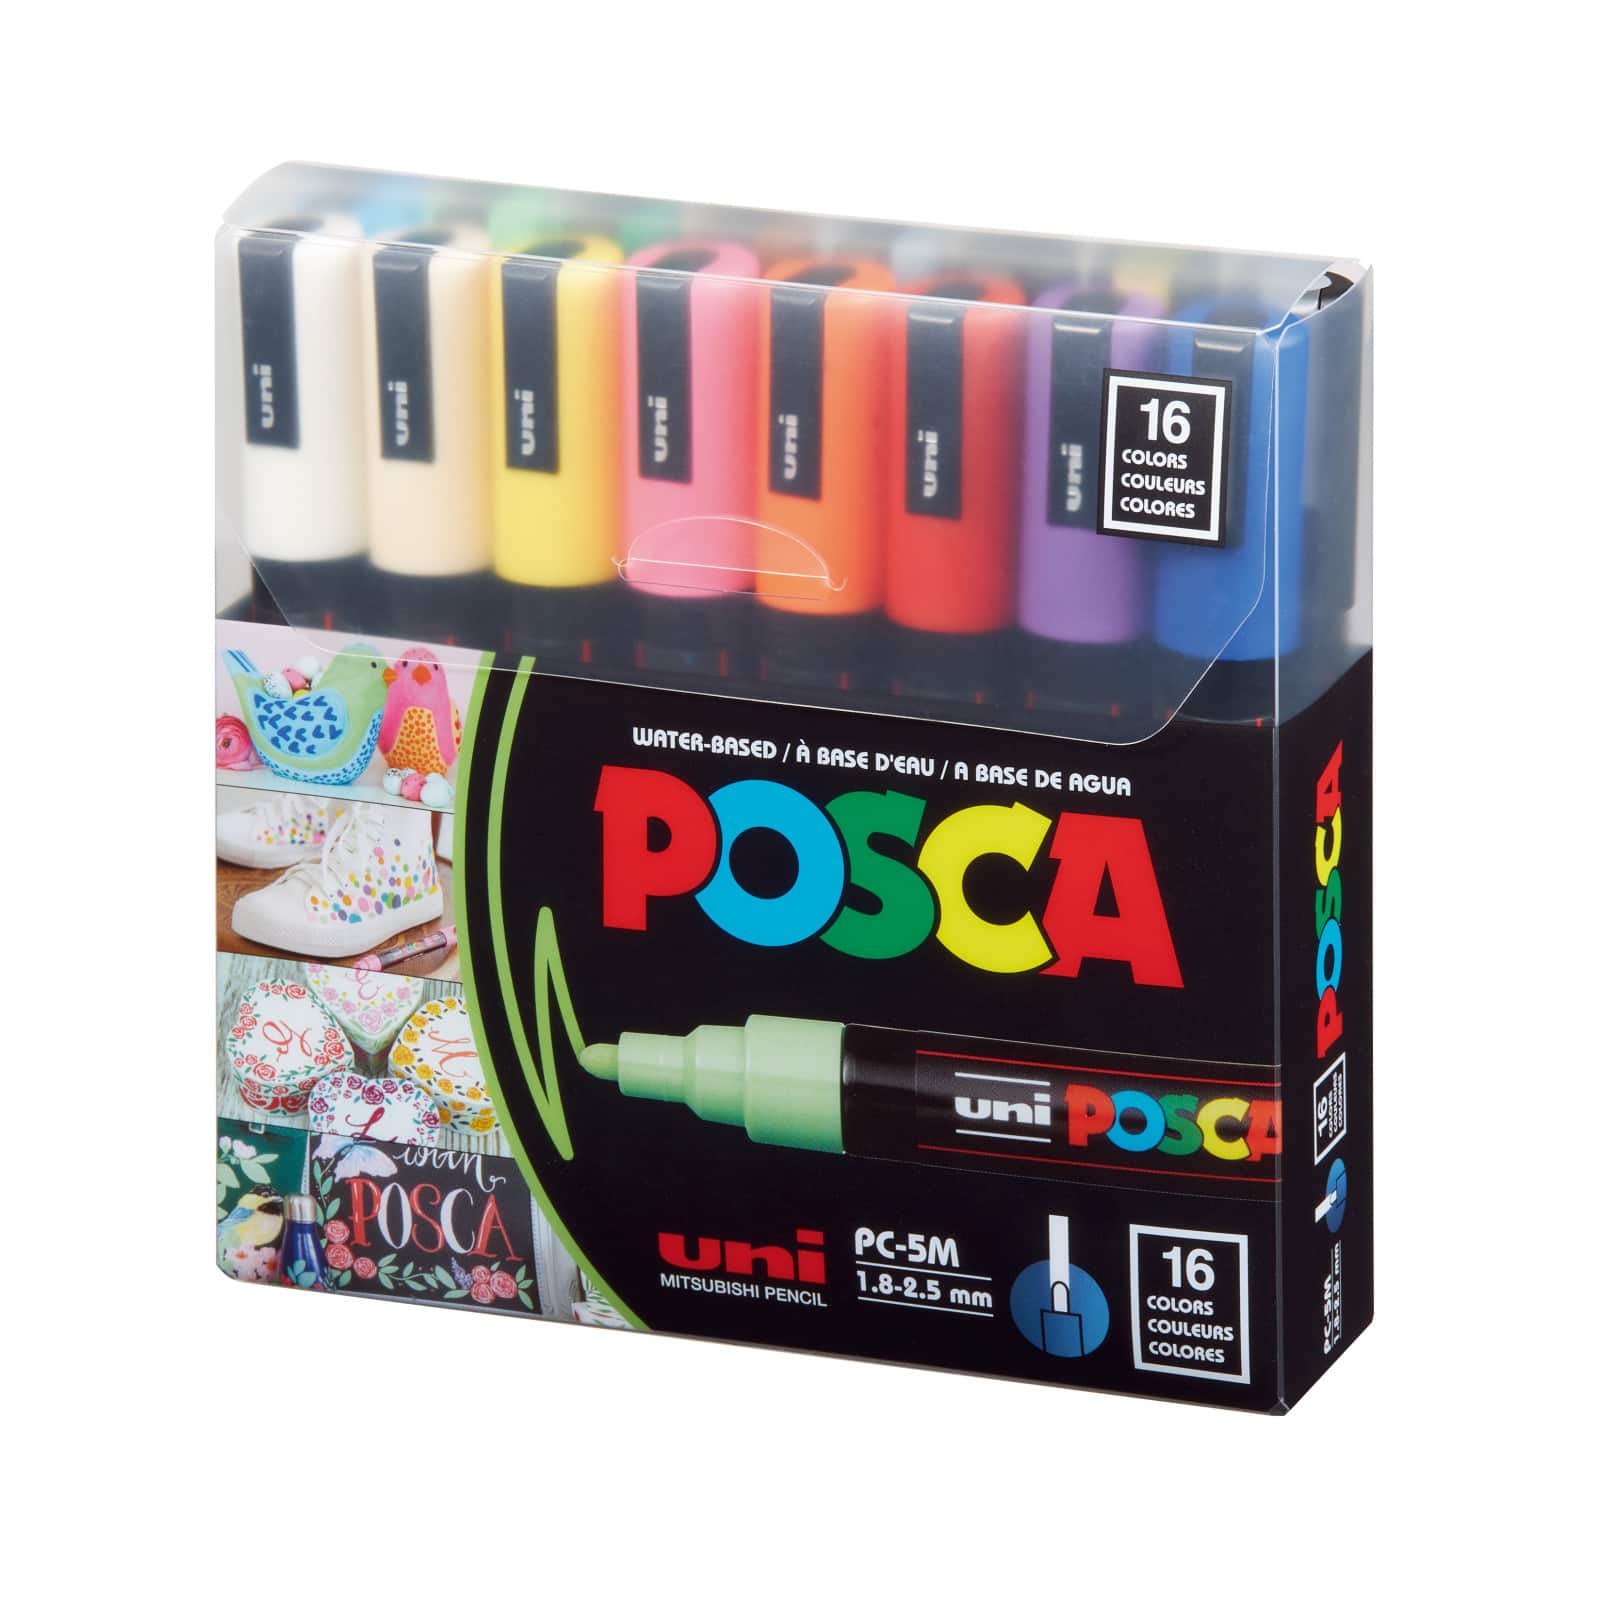 Posca PC5M - Medium Tip  Paint pens, Clear acrylic, Painting